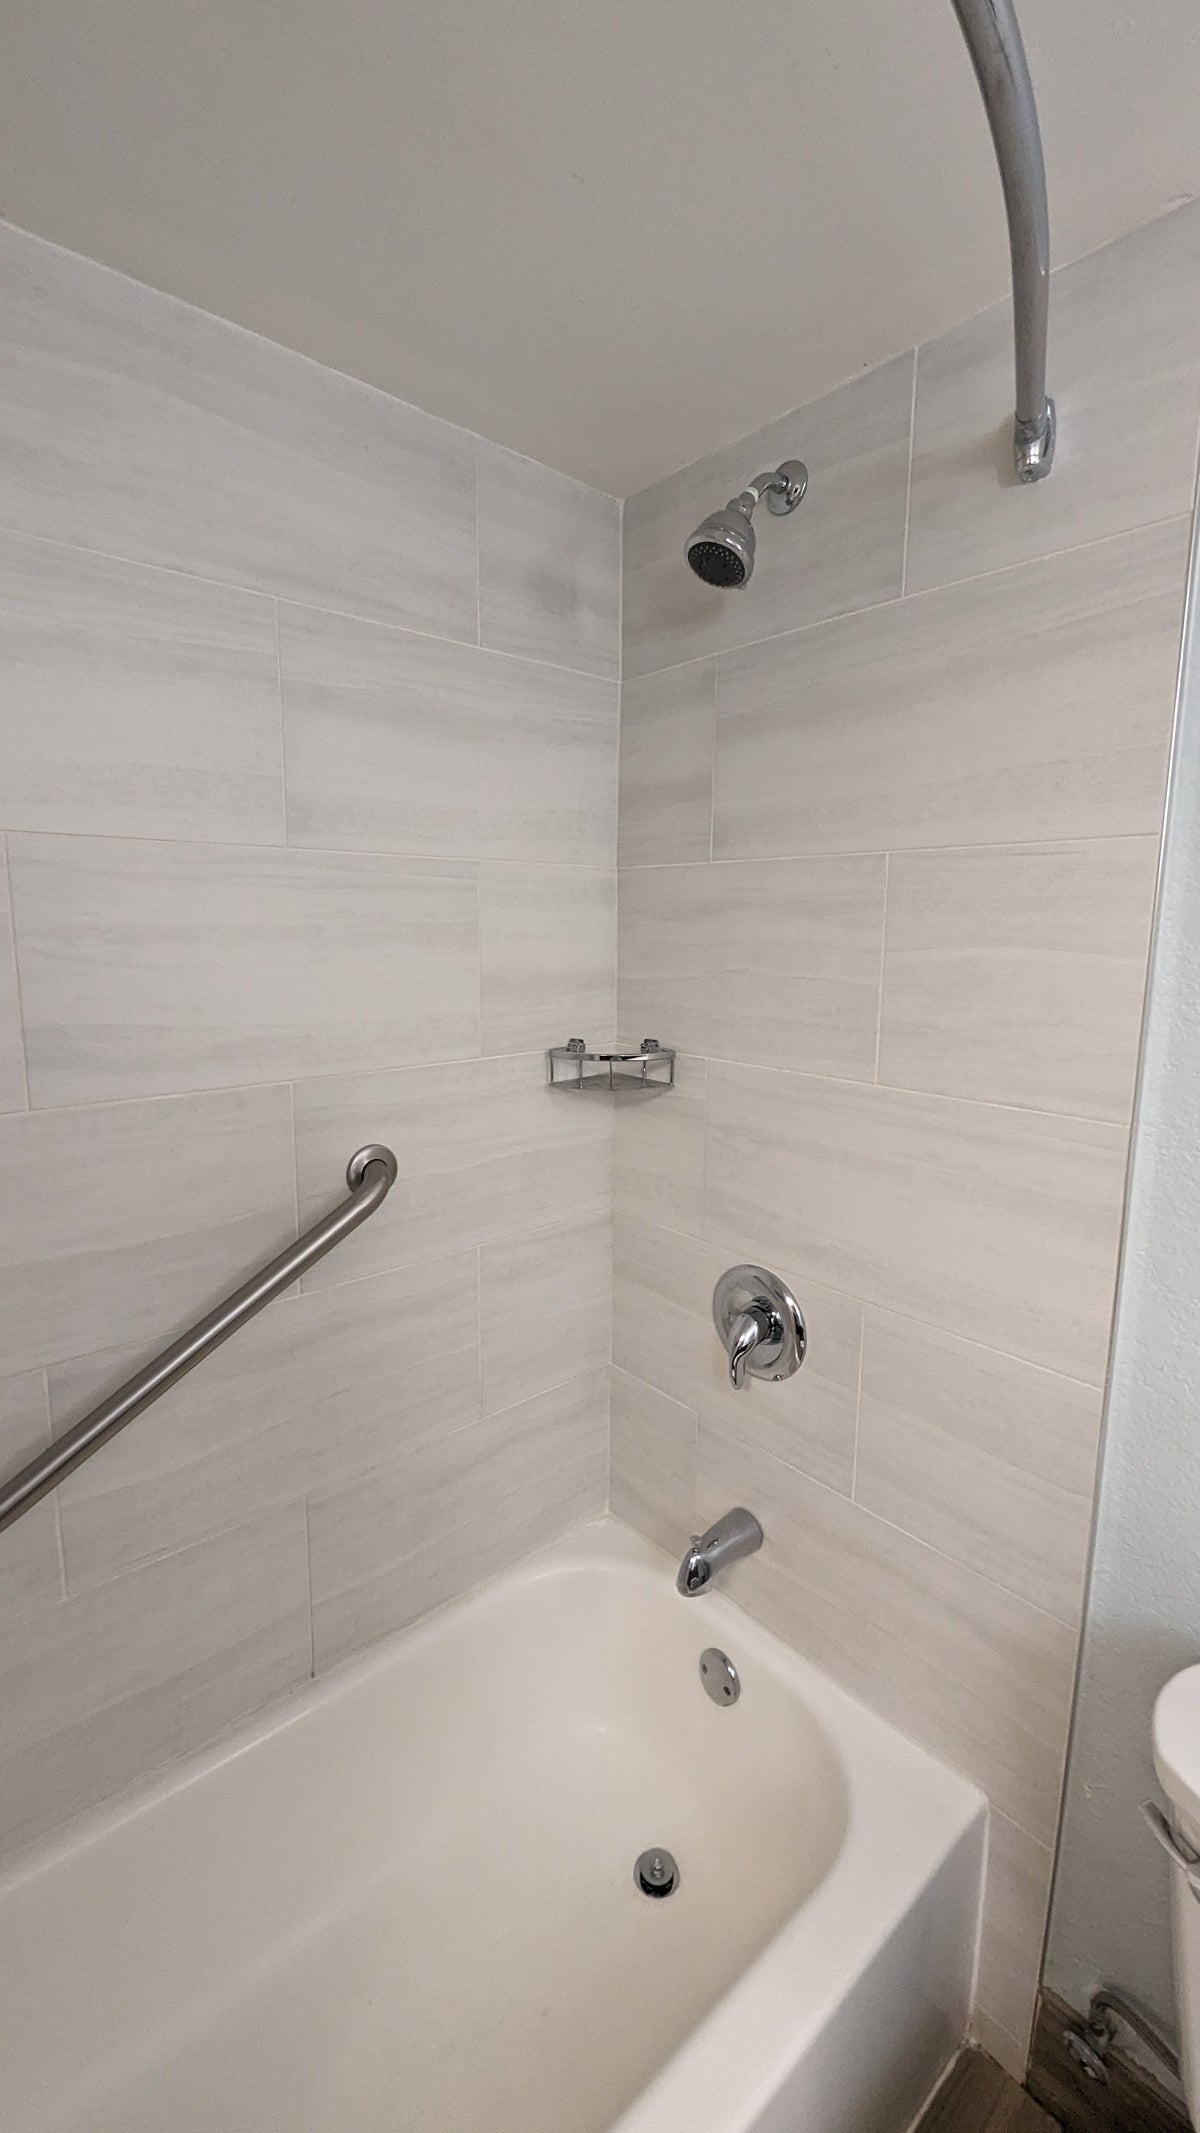 Hilton Pensacola Beach guestroom bathroom shower and tub